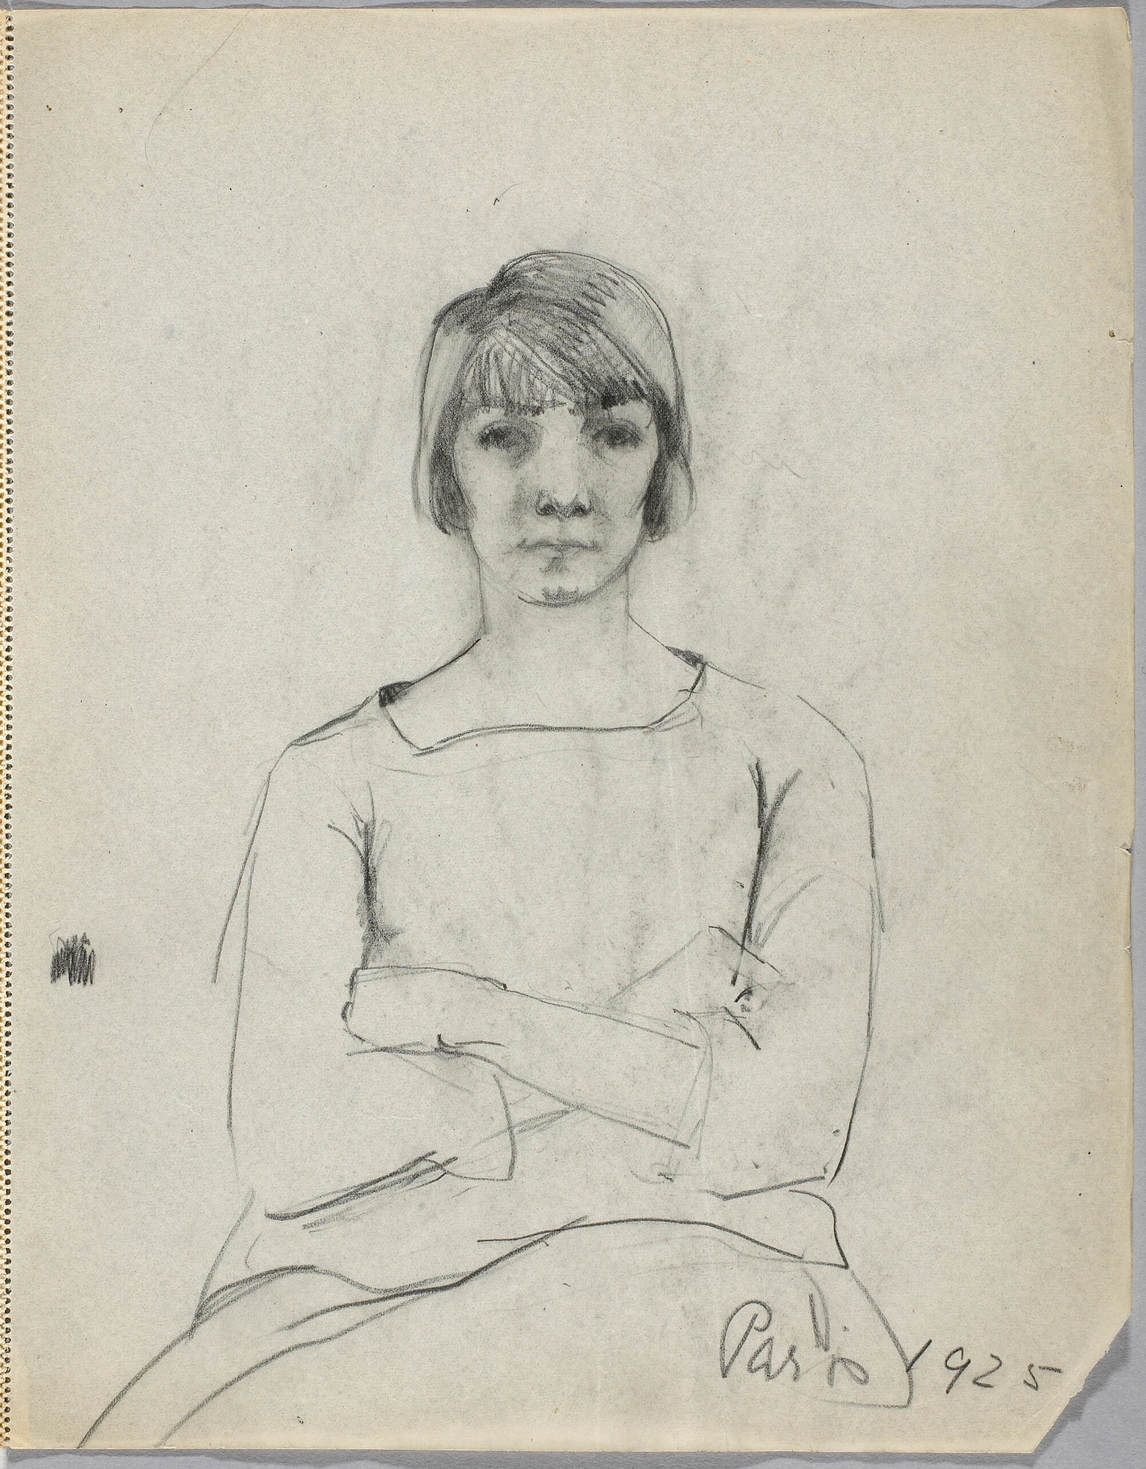 Art Canada Institute, Prudence Heward, Figure Study, 1925